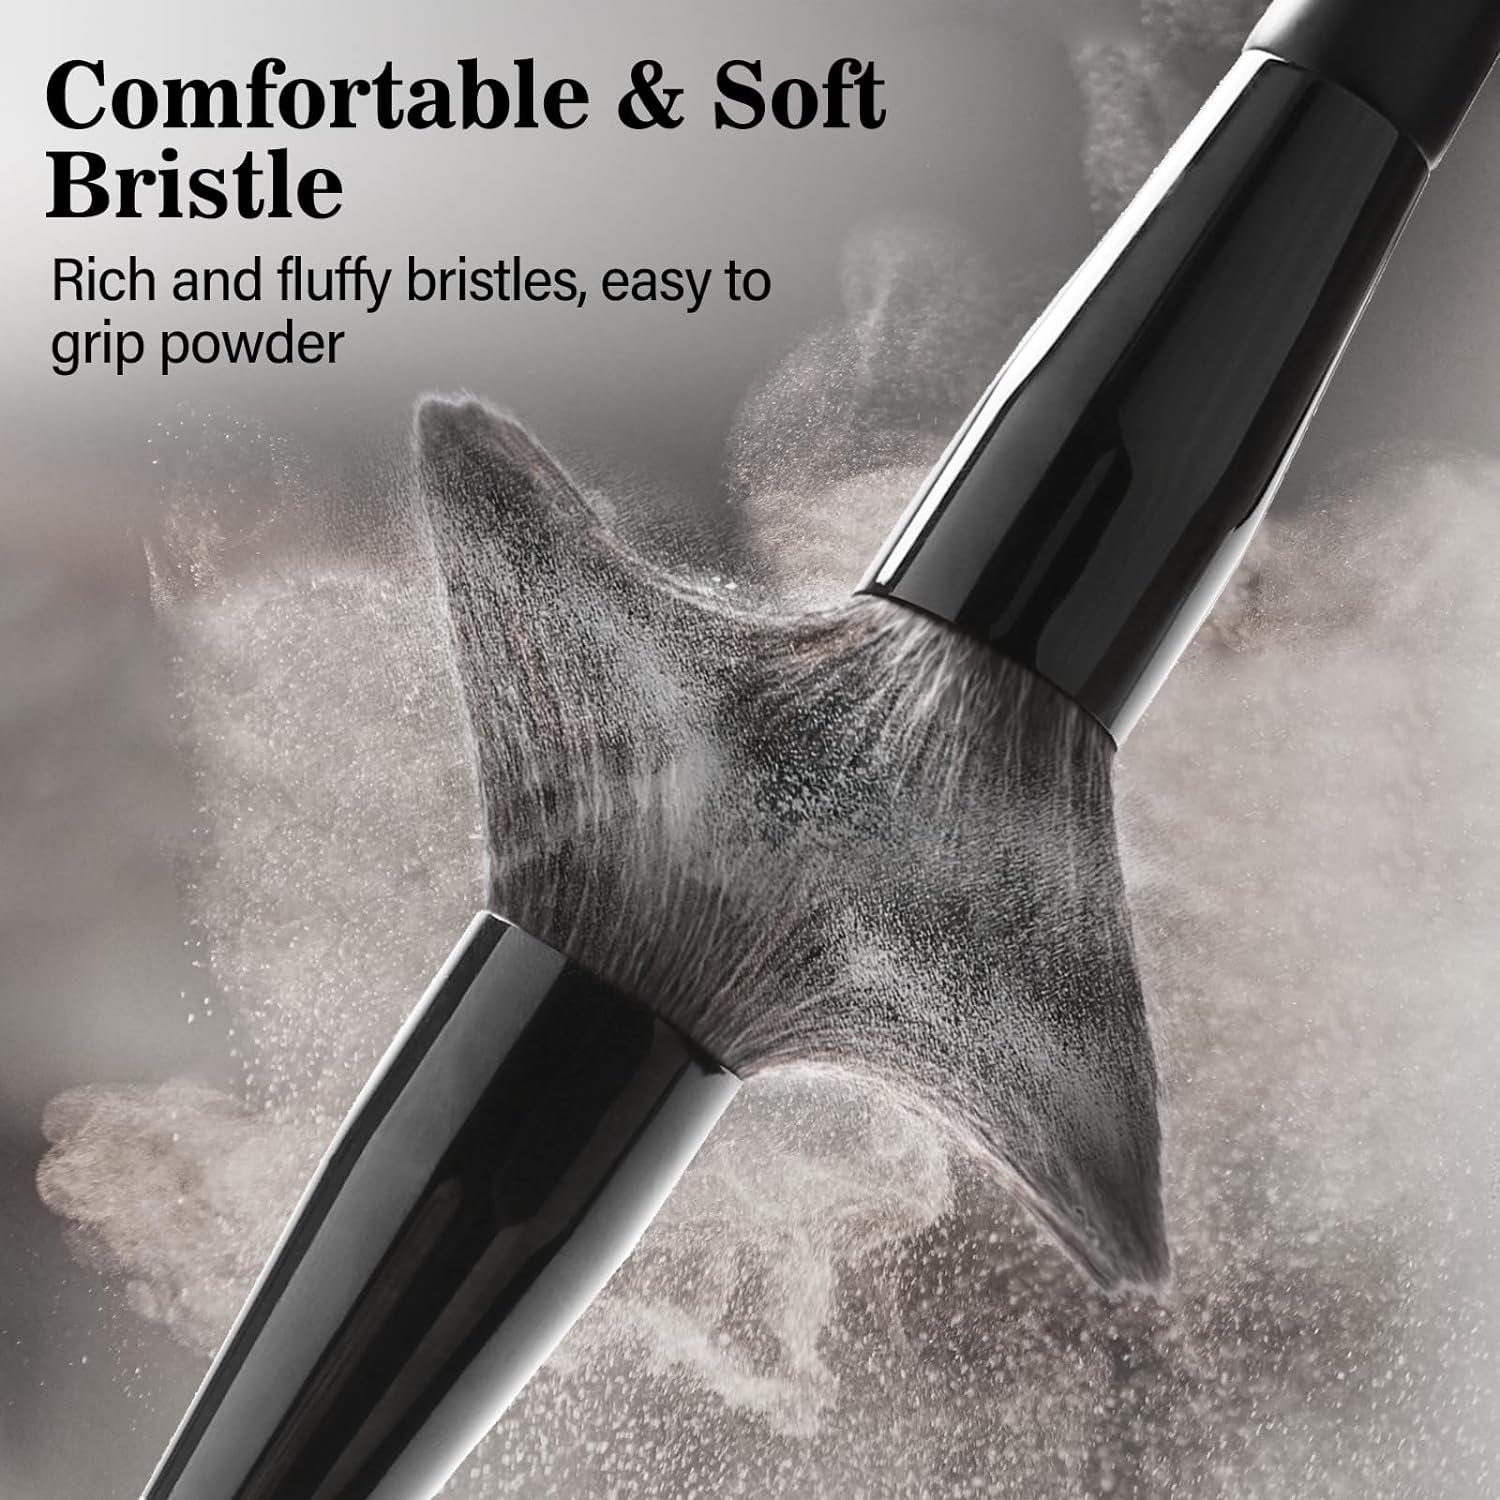 20PCs Professional Makeup Brush Set Make Up Brushes Kit with Travel Case & 2 Powder Puff-Black